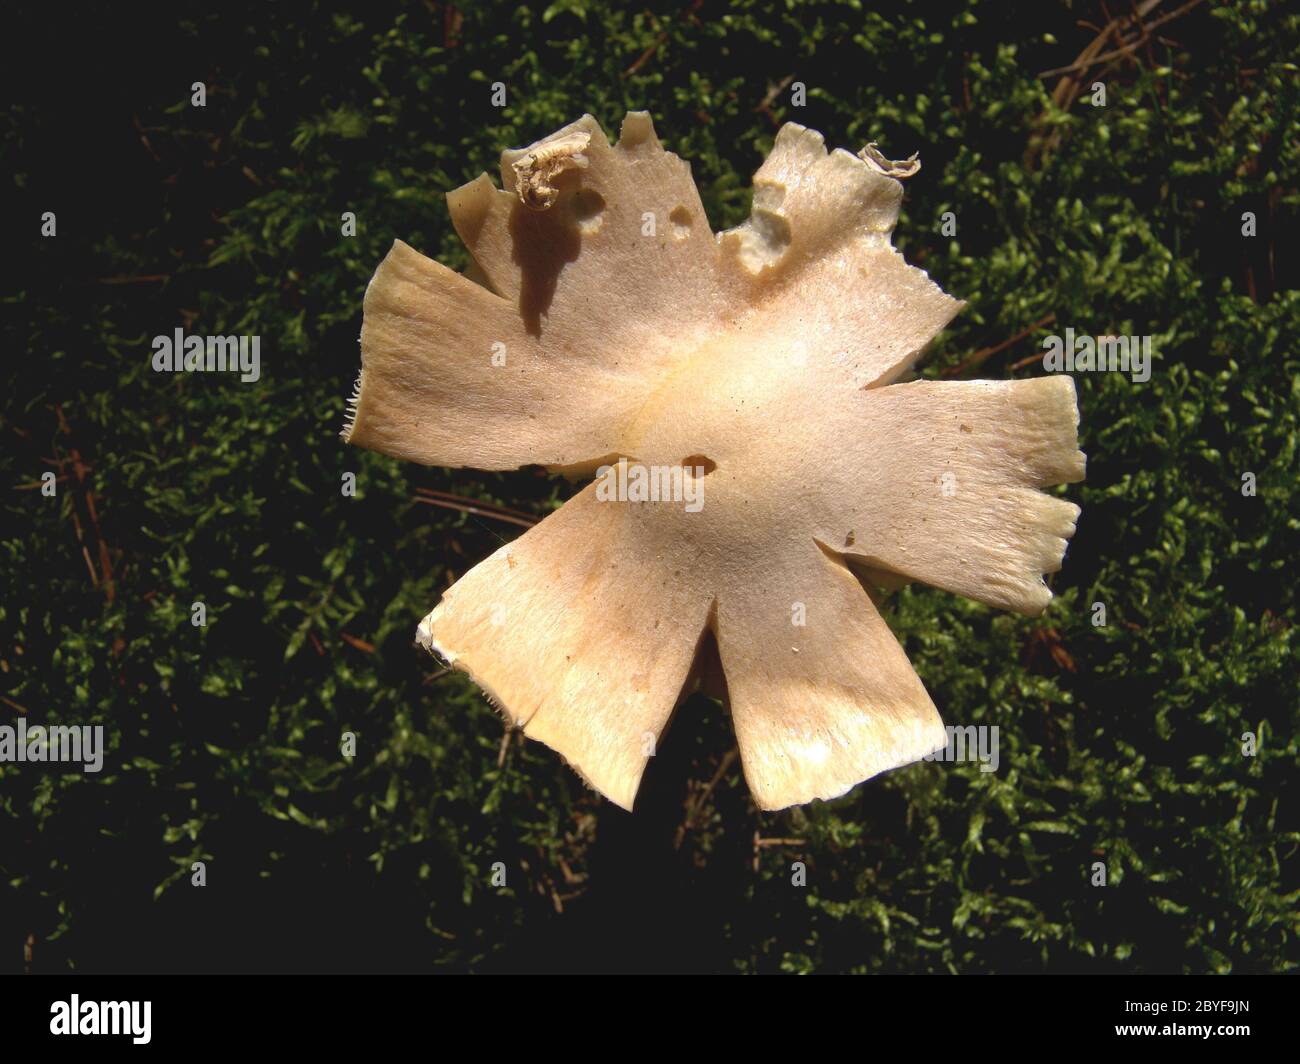 Cultivated mushroom Stock Photo